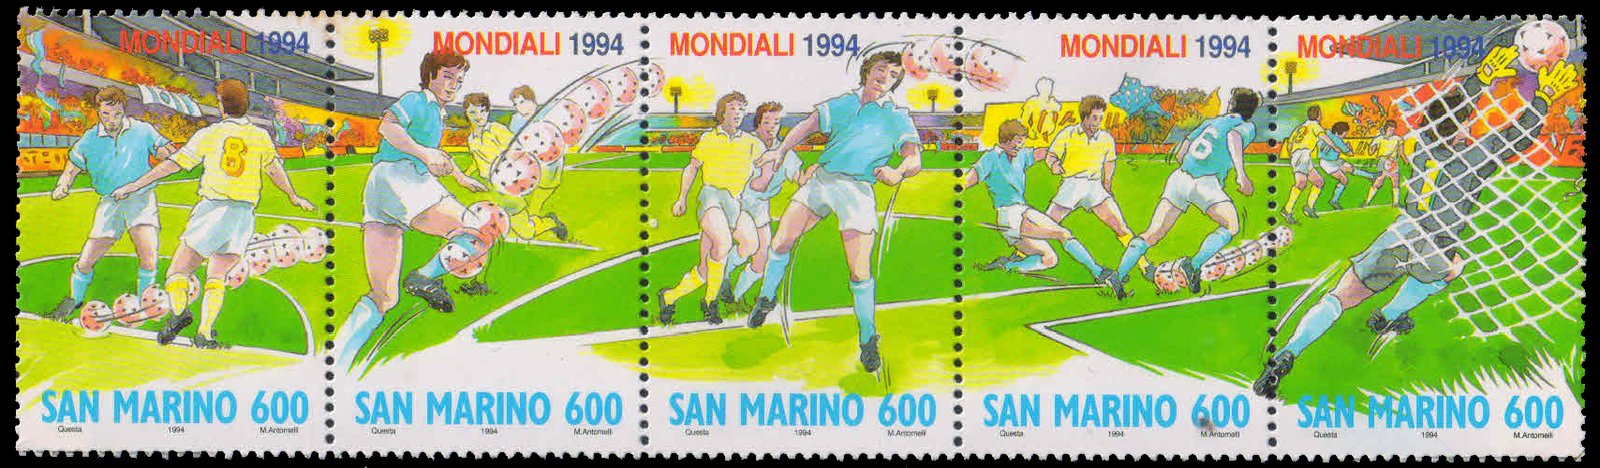 SANMARINO 1994-World Cup Football Championship, S.G. 1480-1484-Strip of 5, Se-tenant